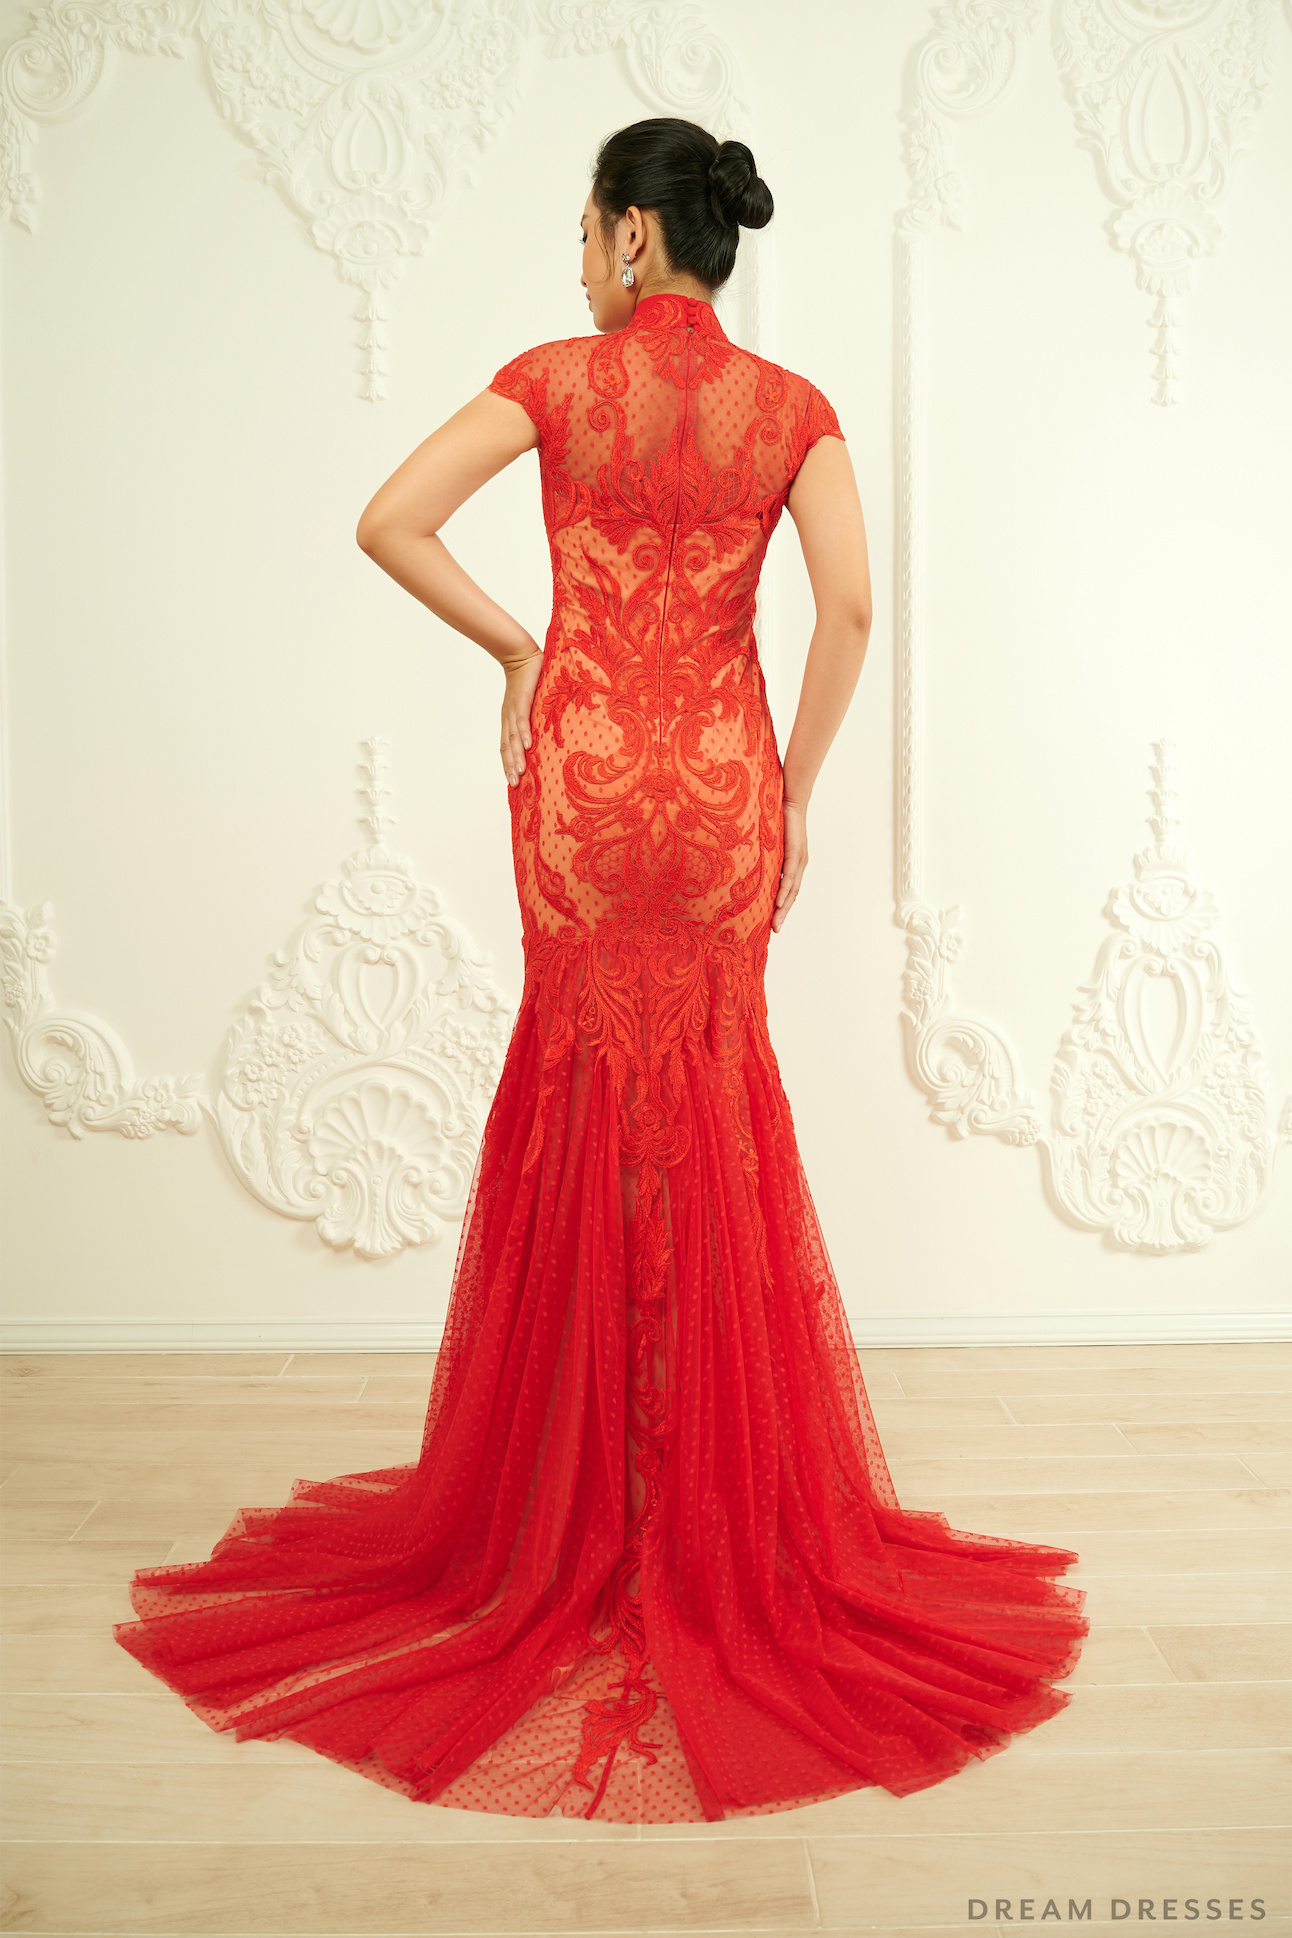 Chinese Inspired Red Wedding Dress (#Yanlin)